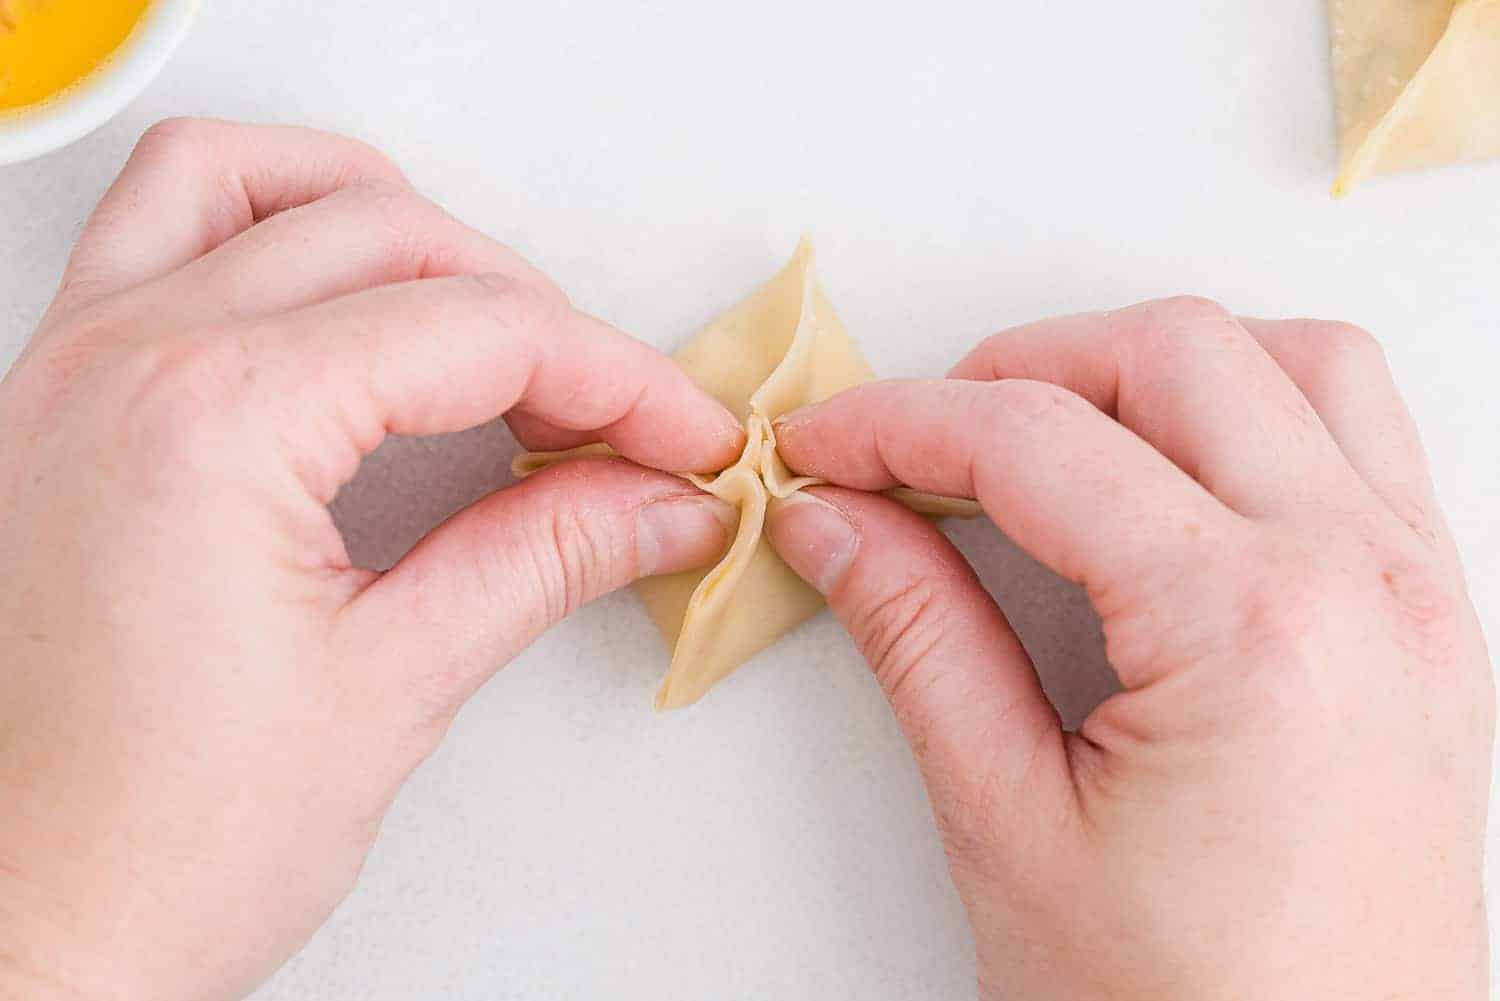 Two hands shown folding a rangoon.